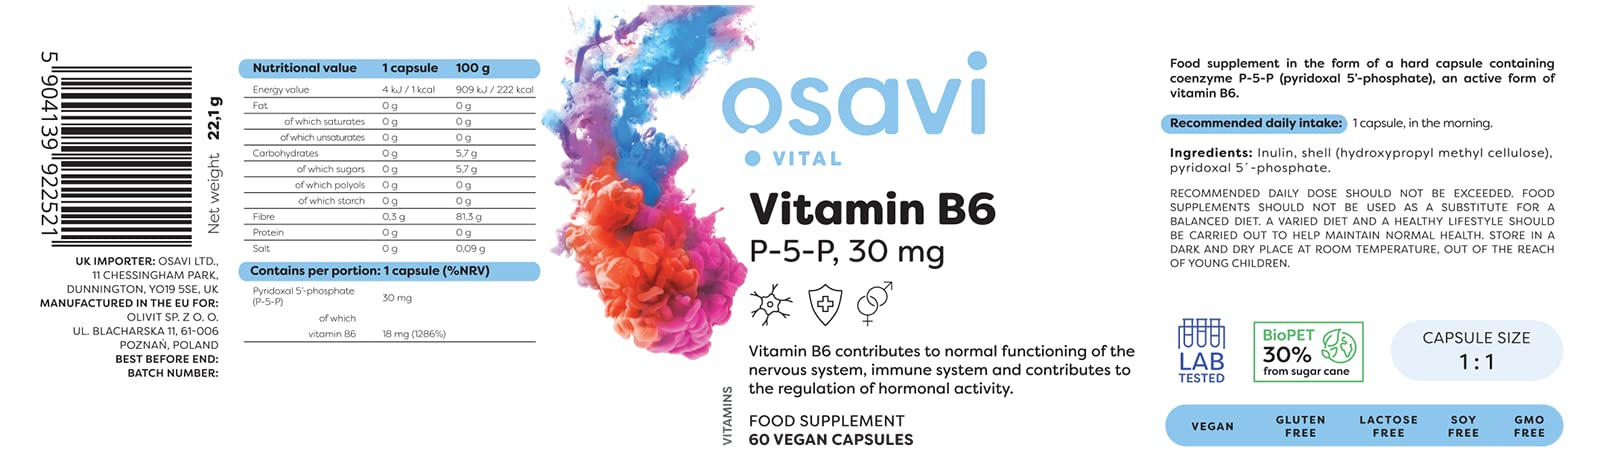 Osavi Vitamin B6 - P-5-P, 30 mg - 60 vegan caps - Vitamin B6 at MySupplementShop by Osavi